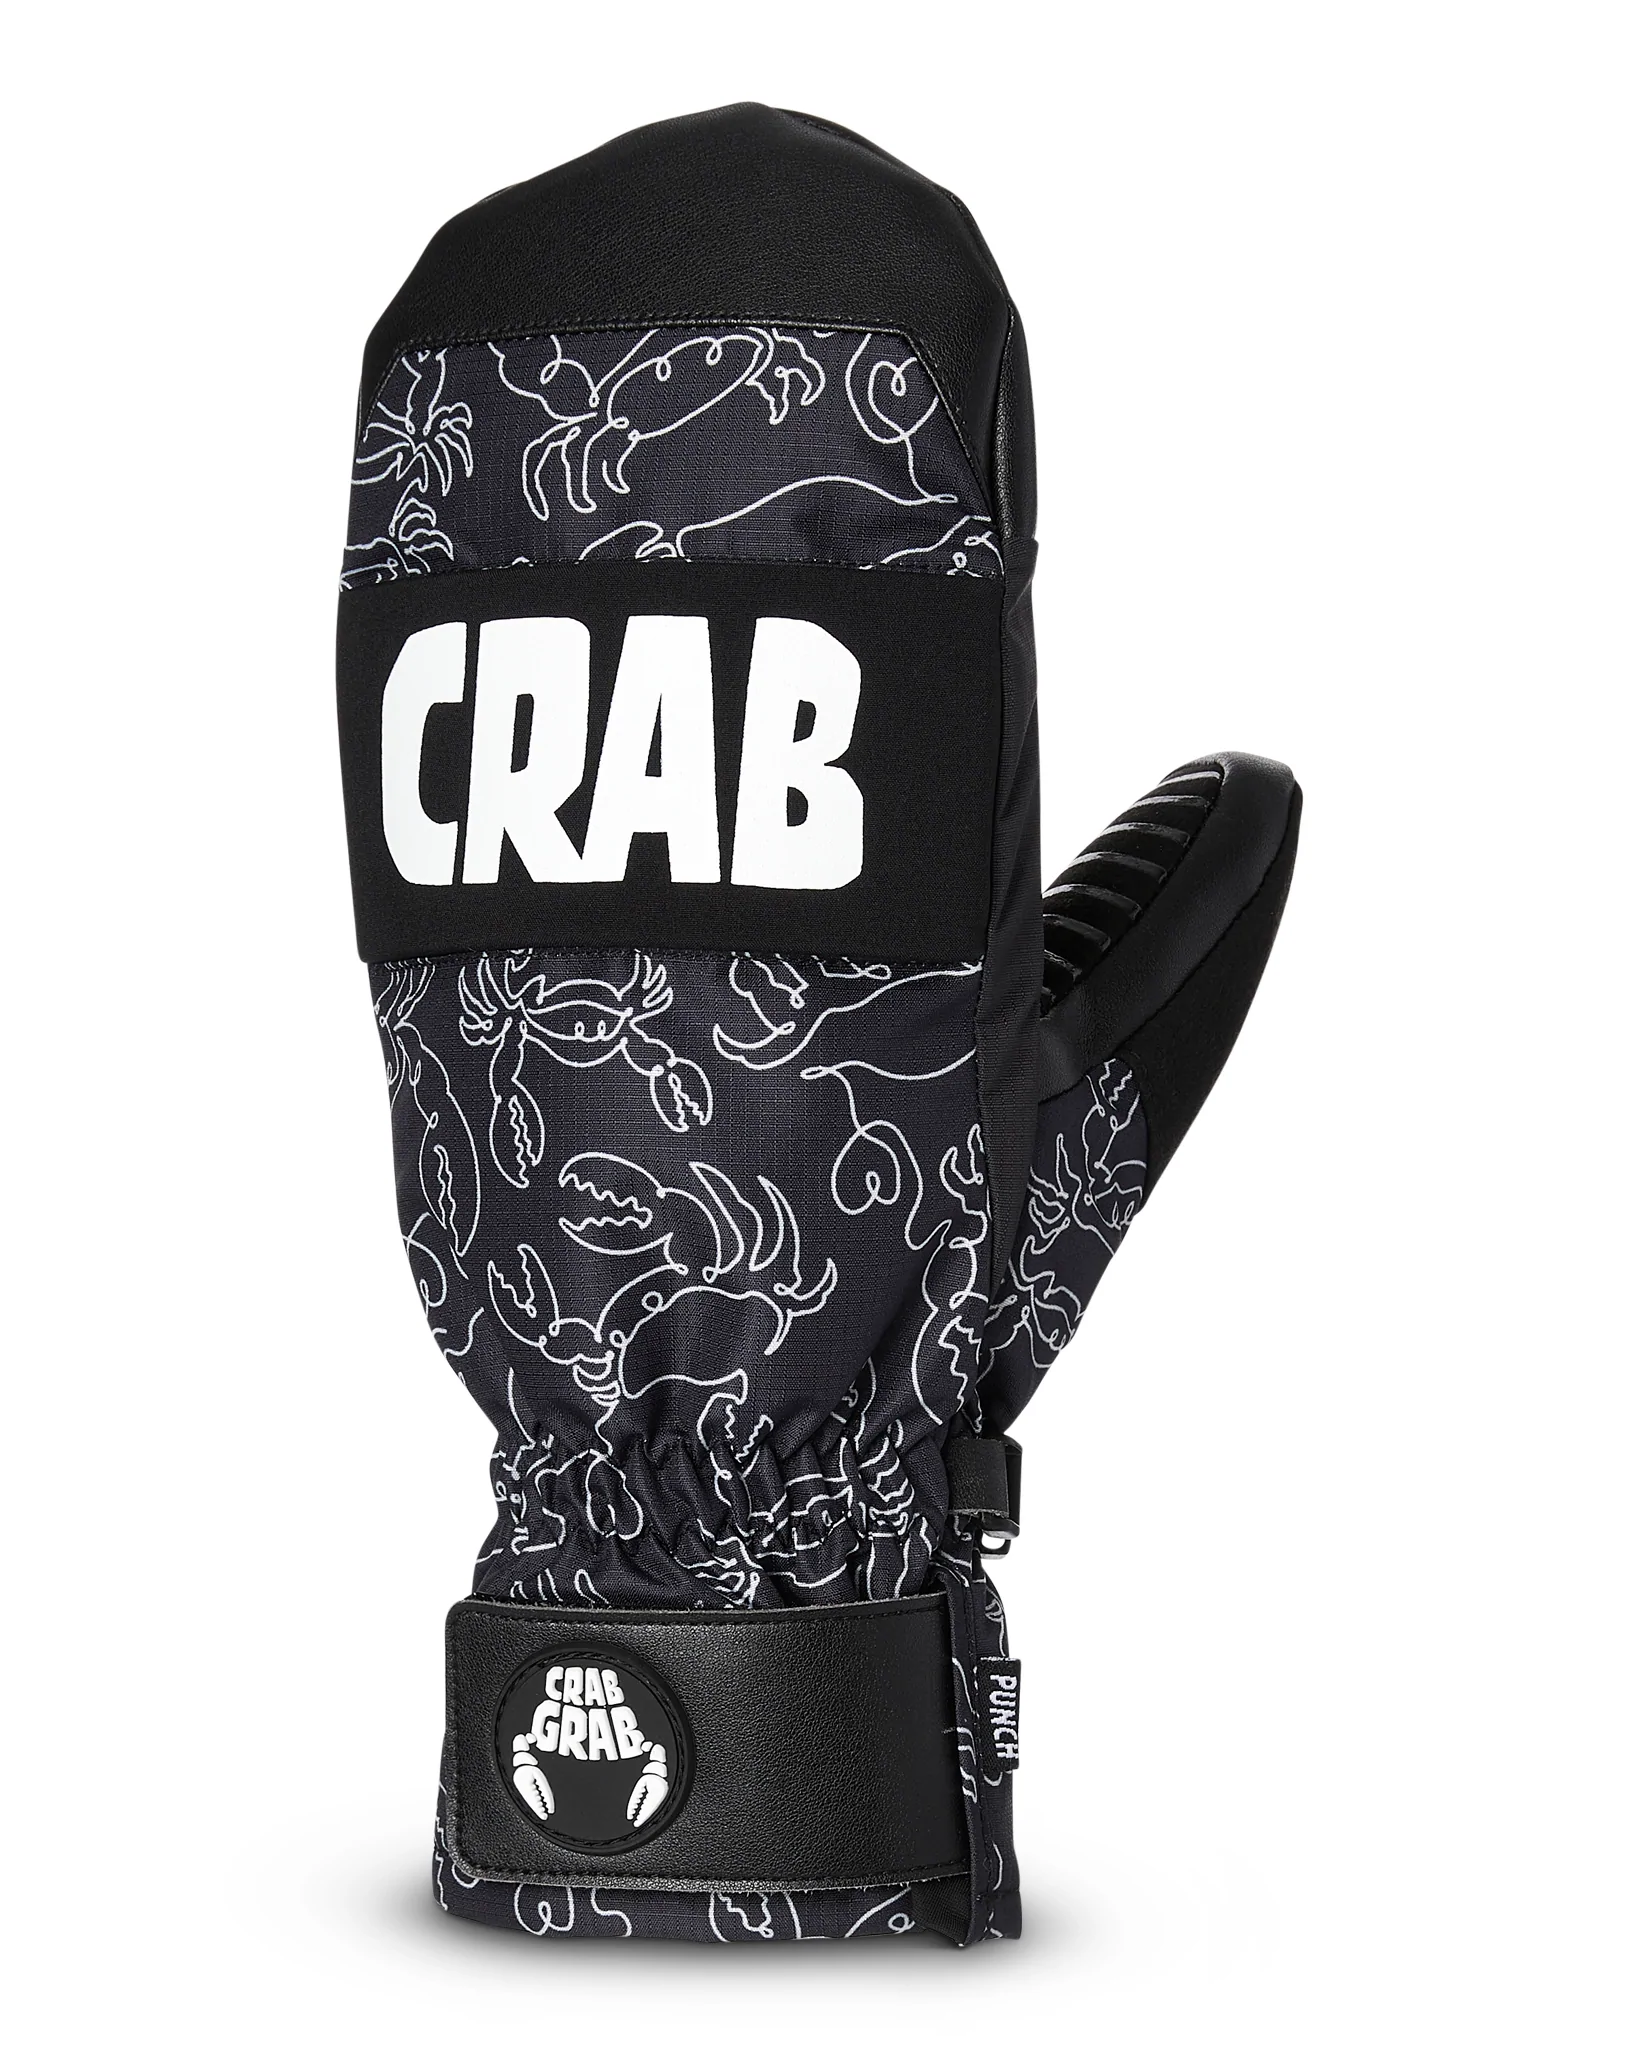 Crab Grab Punch Mitt - Crab Doodle Black - S